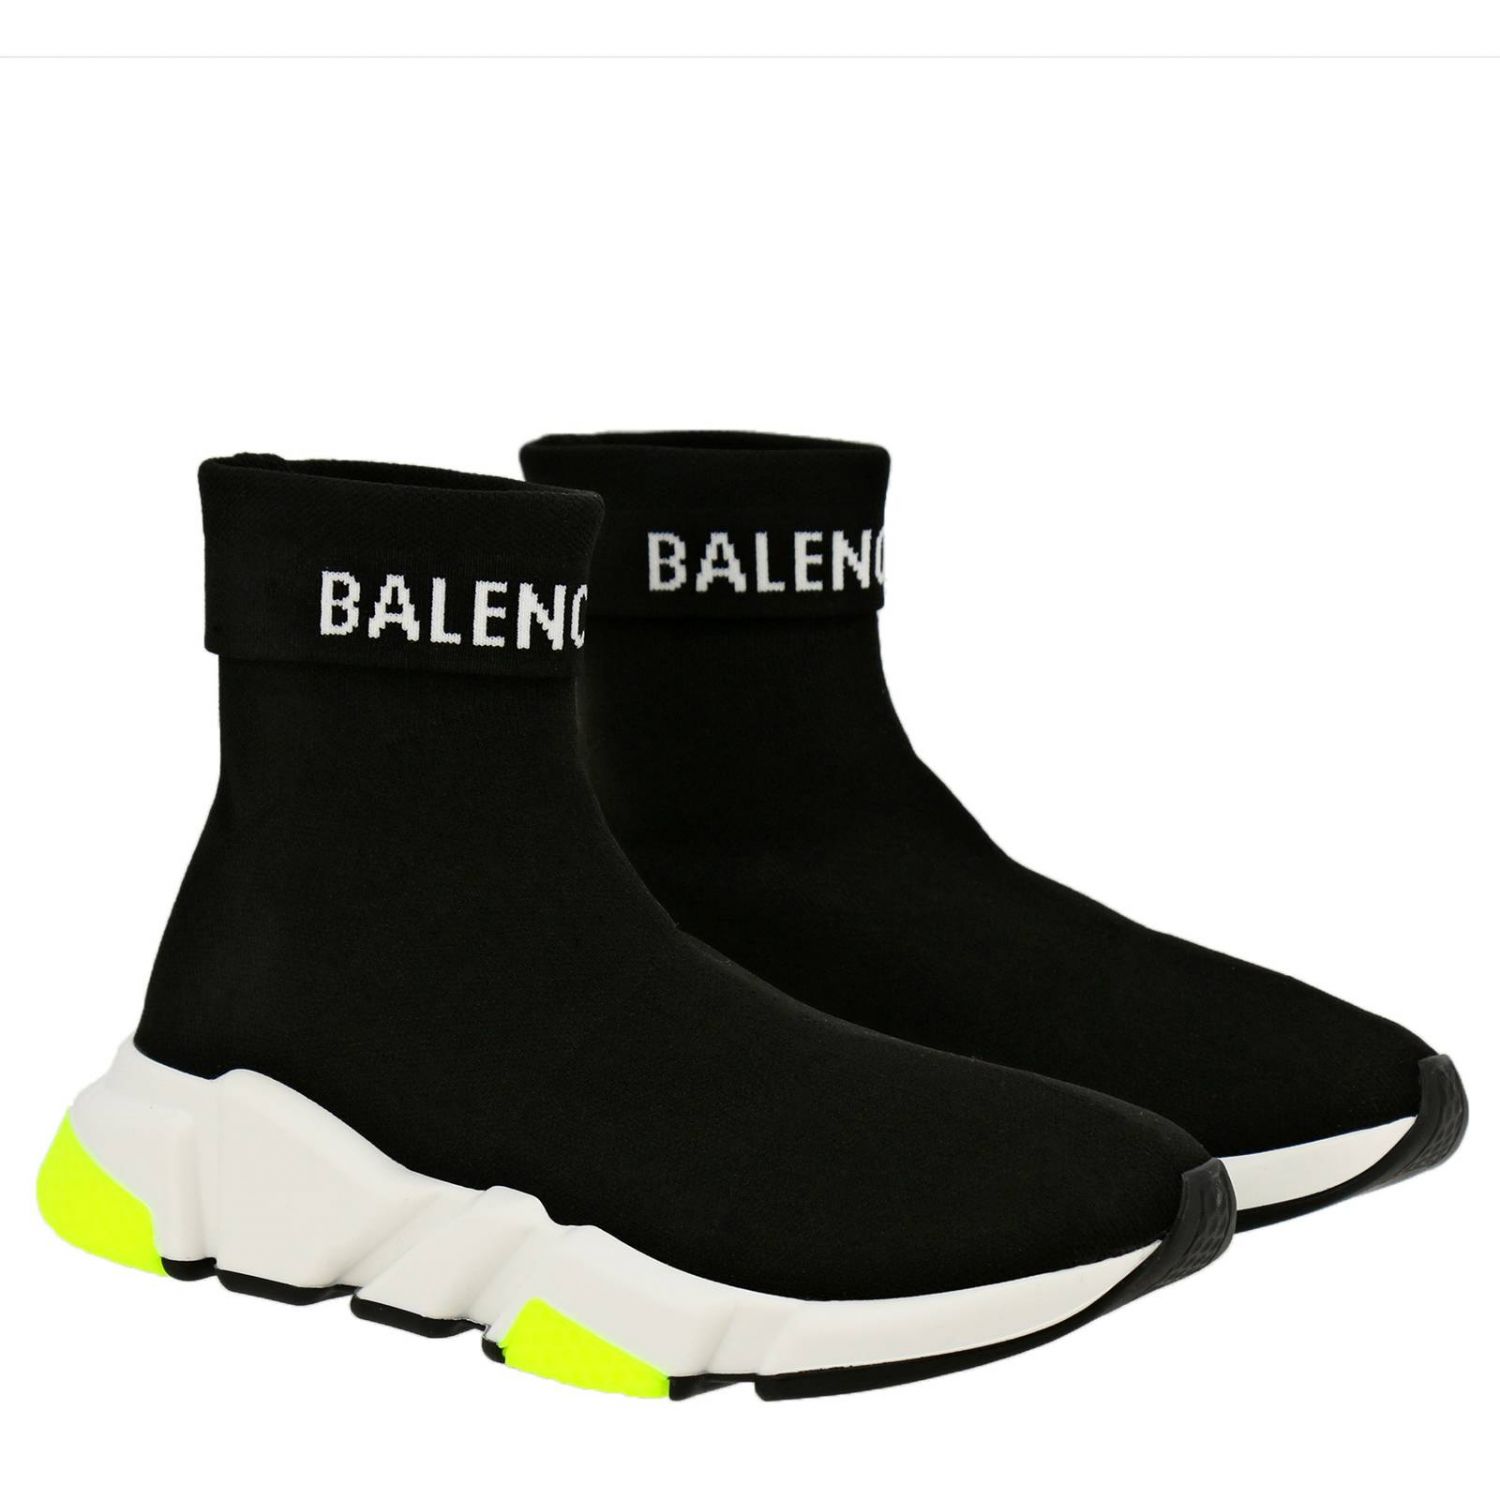 BALENCIAGA: Shoes women | Sneakers Balenciaga Women Black | Sneakers ...